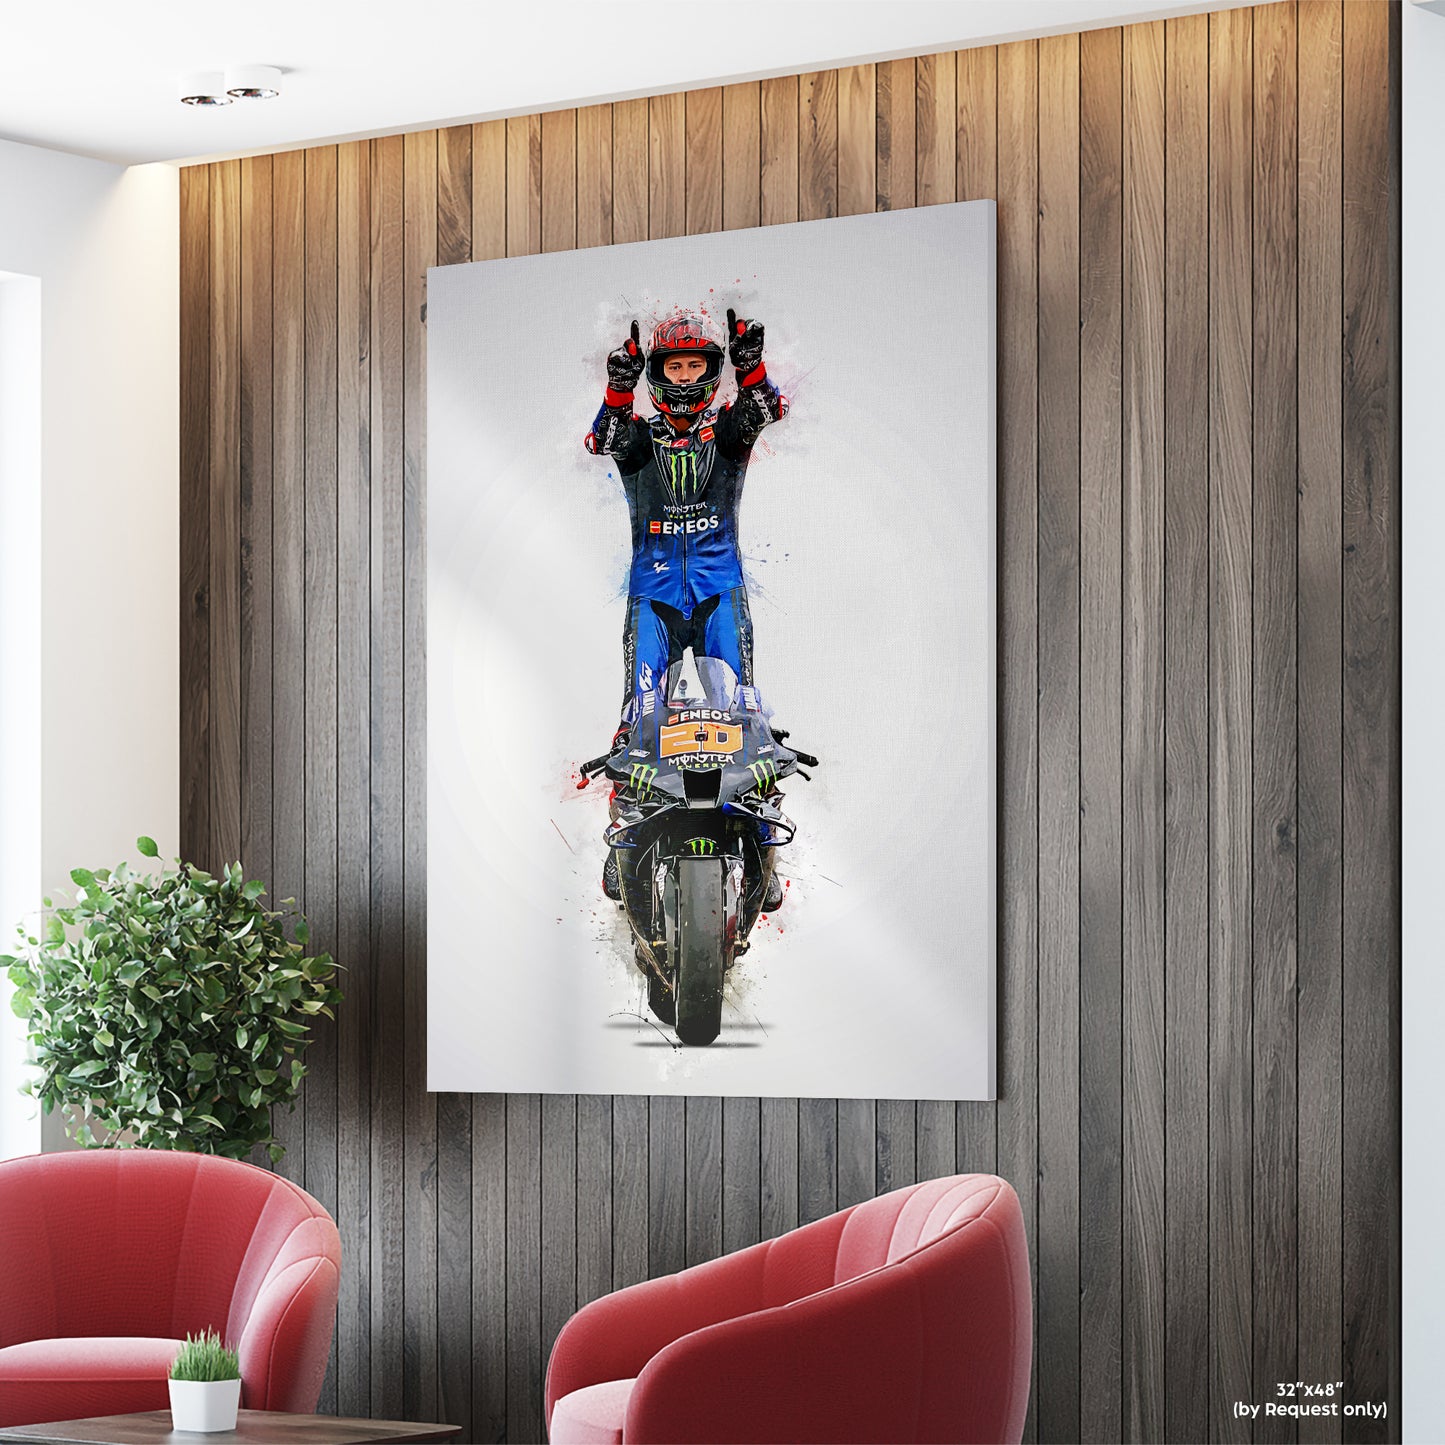 Fabio Quartararo Poster and Canvas, Motogp Print, Motorcycle Stand Ride Poster